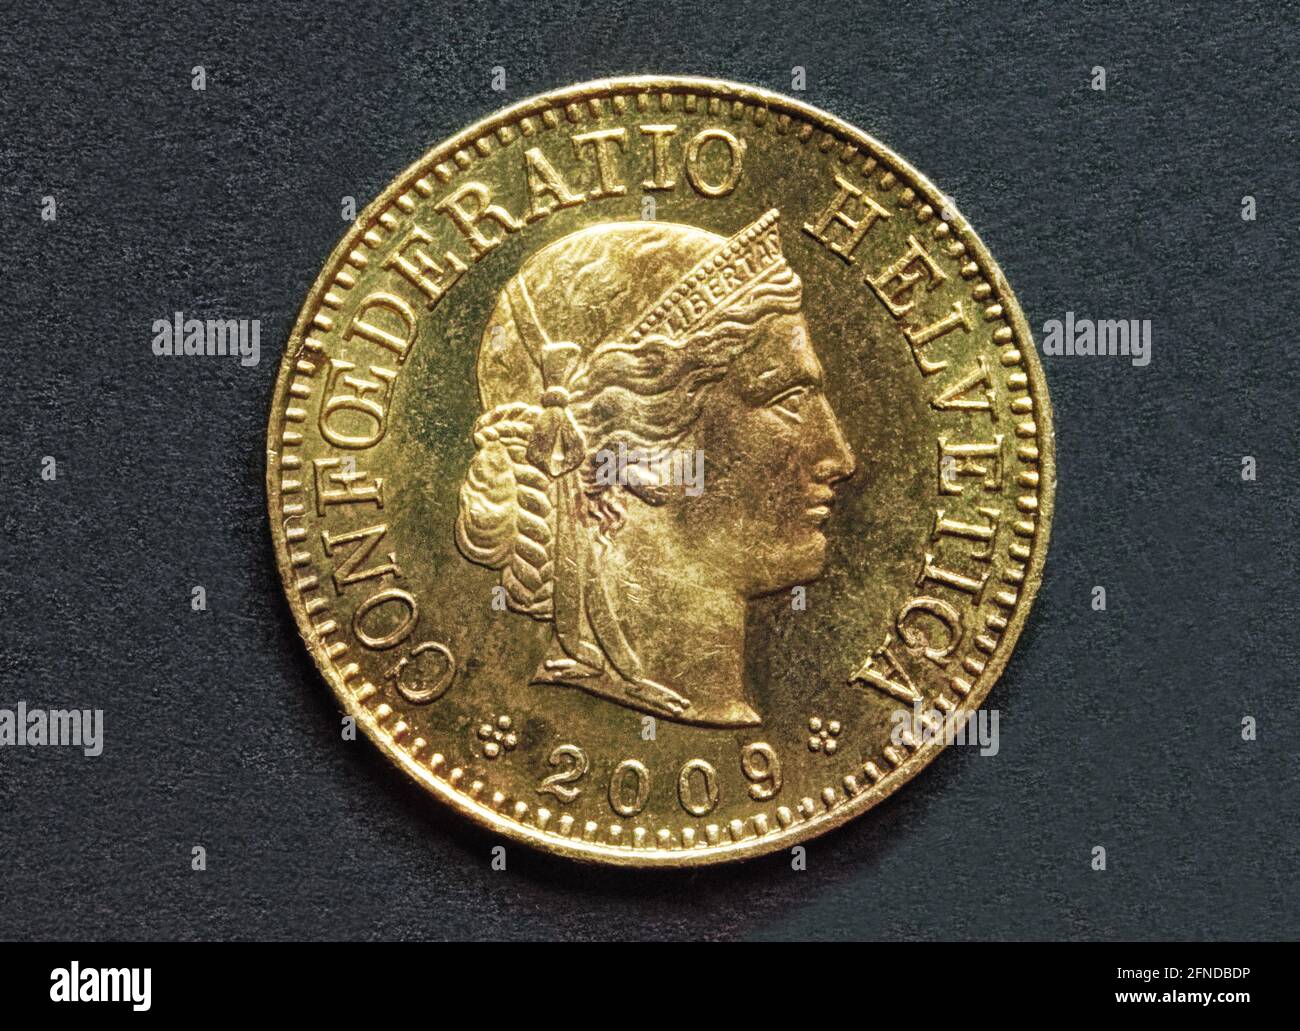 Photo coins,5 rappen, 2009, Switzerland Stock Photo